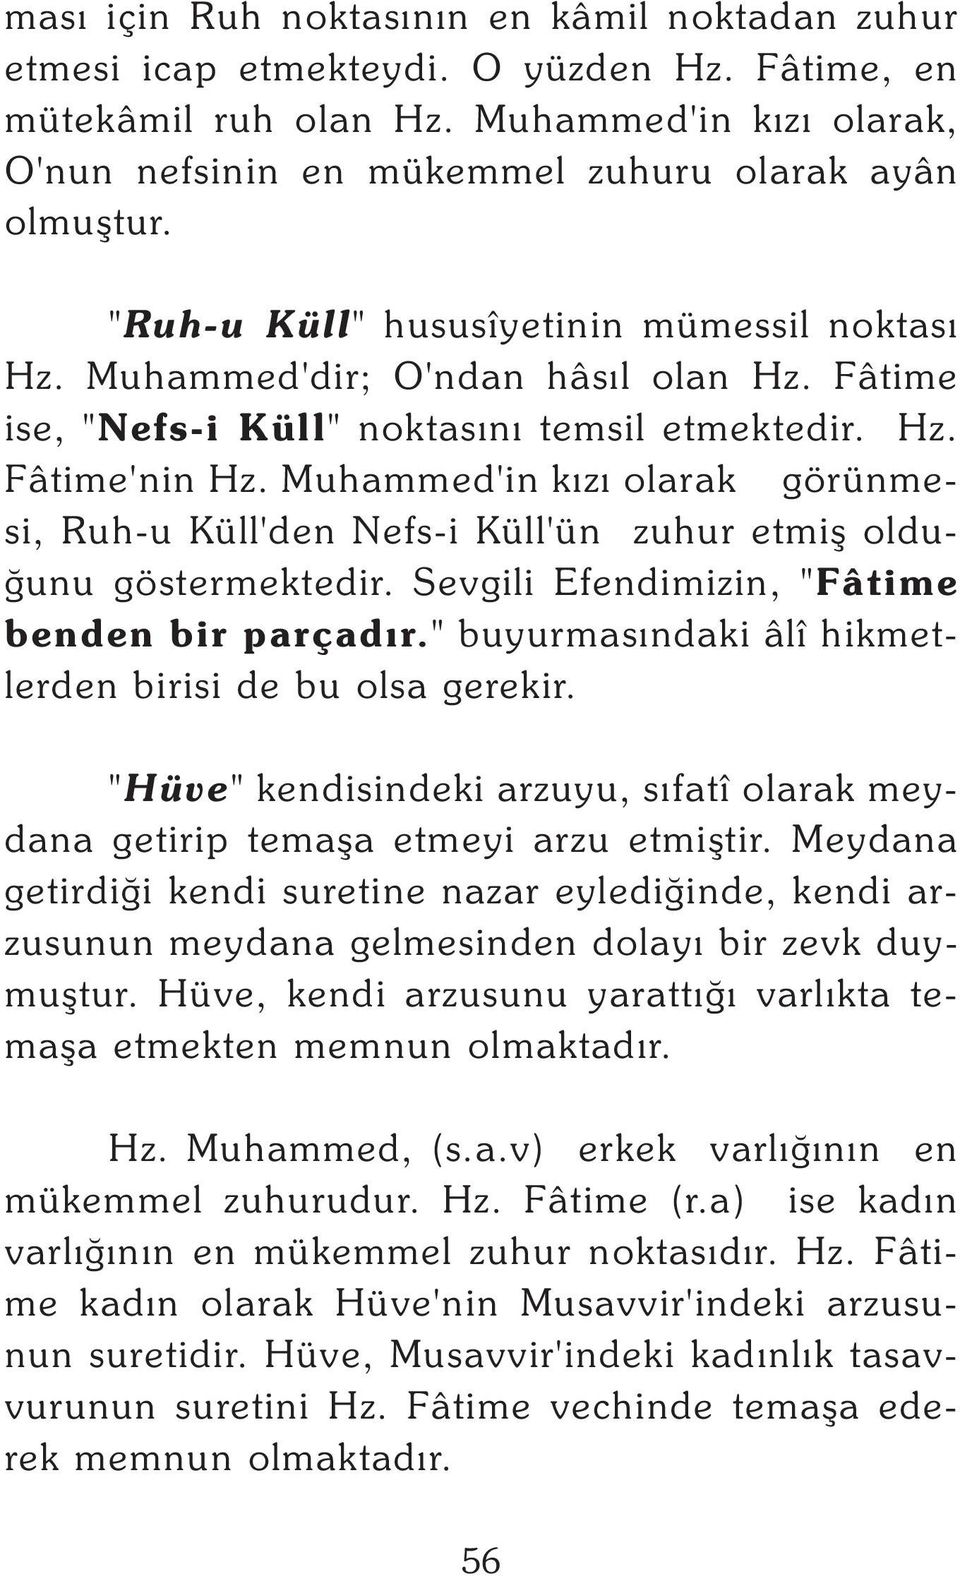 Muhammed'in kýzý olarak görünmesi, Ruh-u Küll'den Nefs-i Küll'ün zuhur etmiþ olduðunu göstermektedir. Sevgili Efendimizin, "Fâtime benden bir parçadýr.